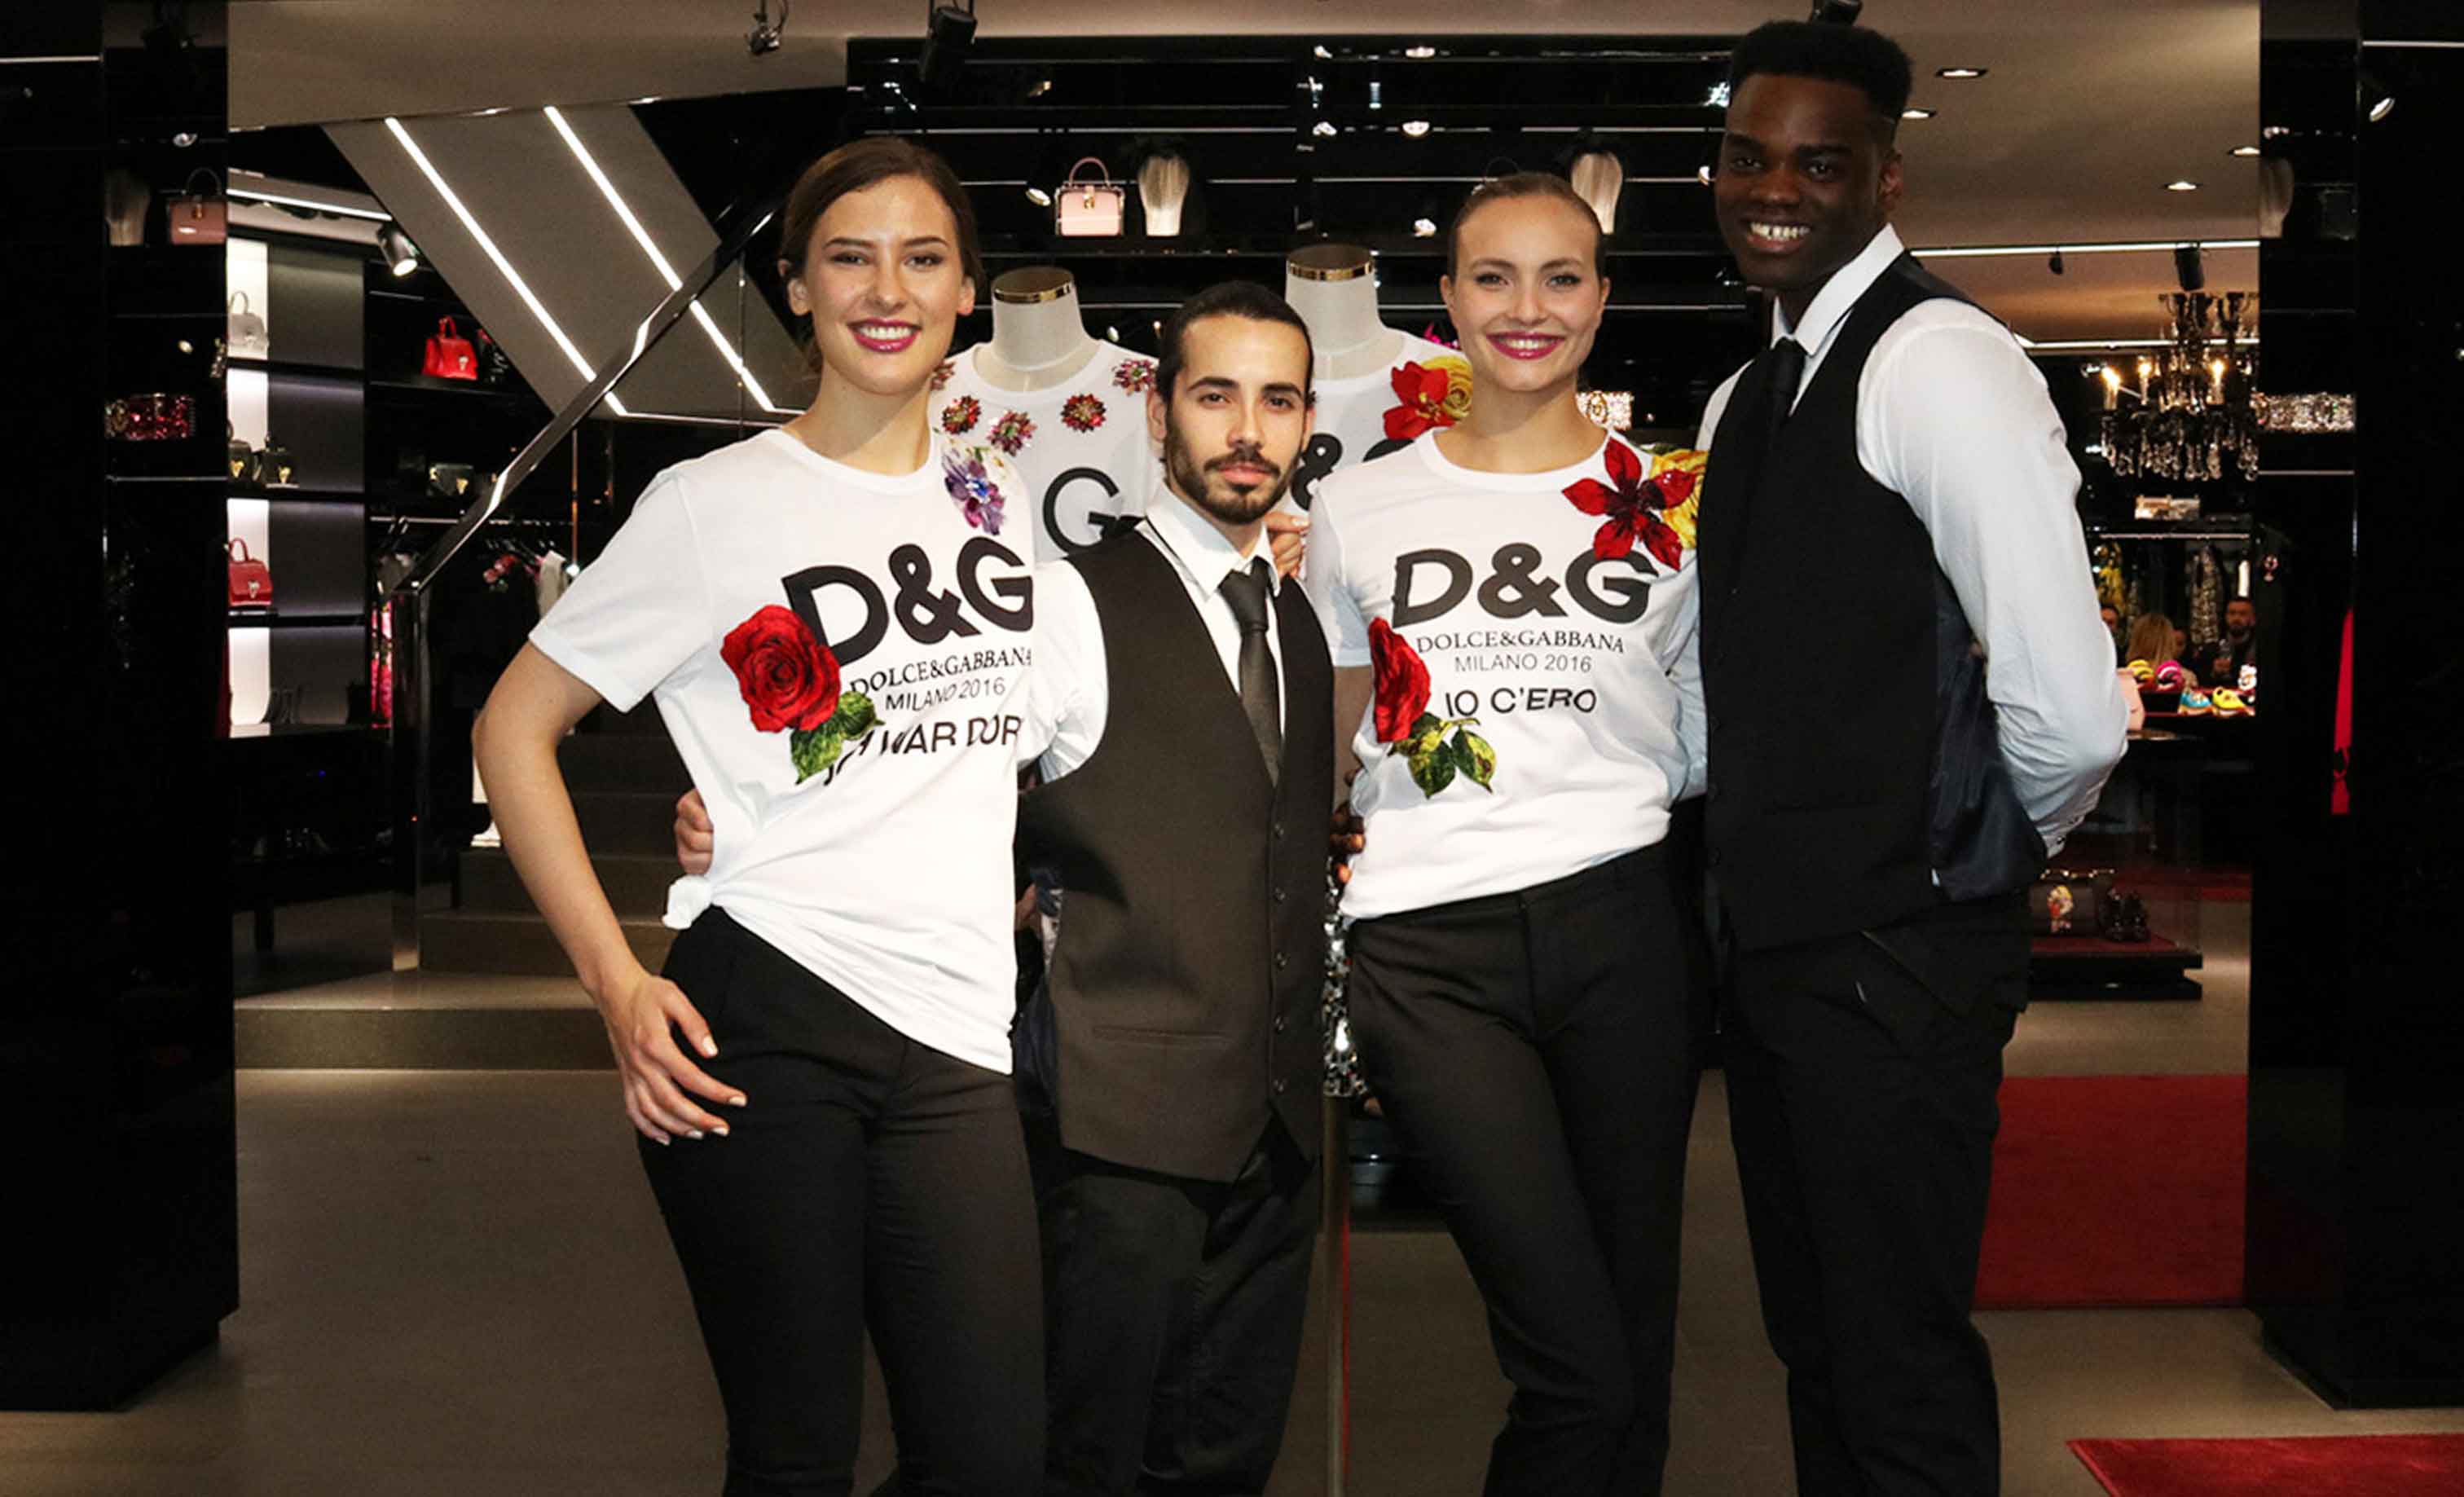 D & G Event at Ku'Damm with IZOE hostess personnel